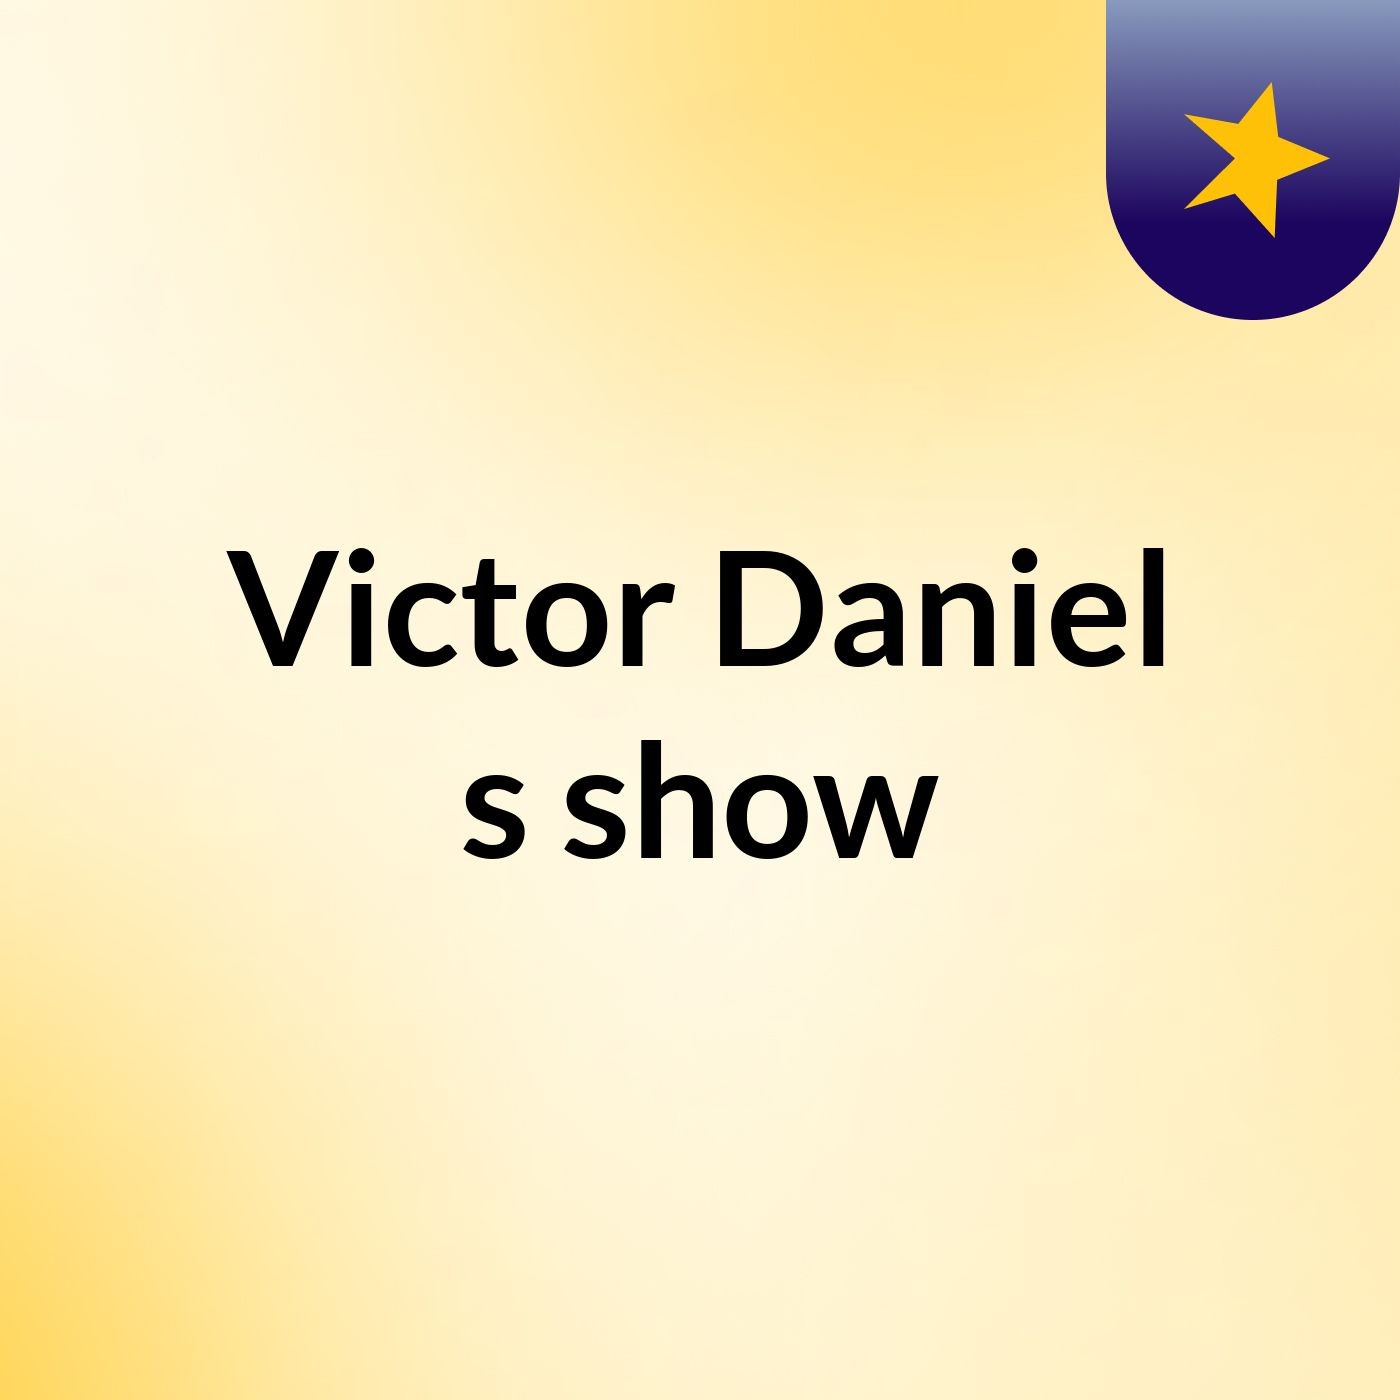 Victor Daniel's show